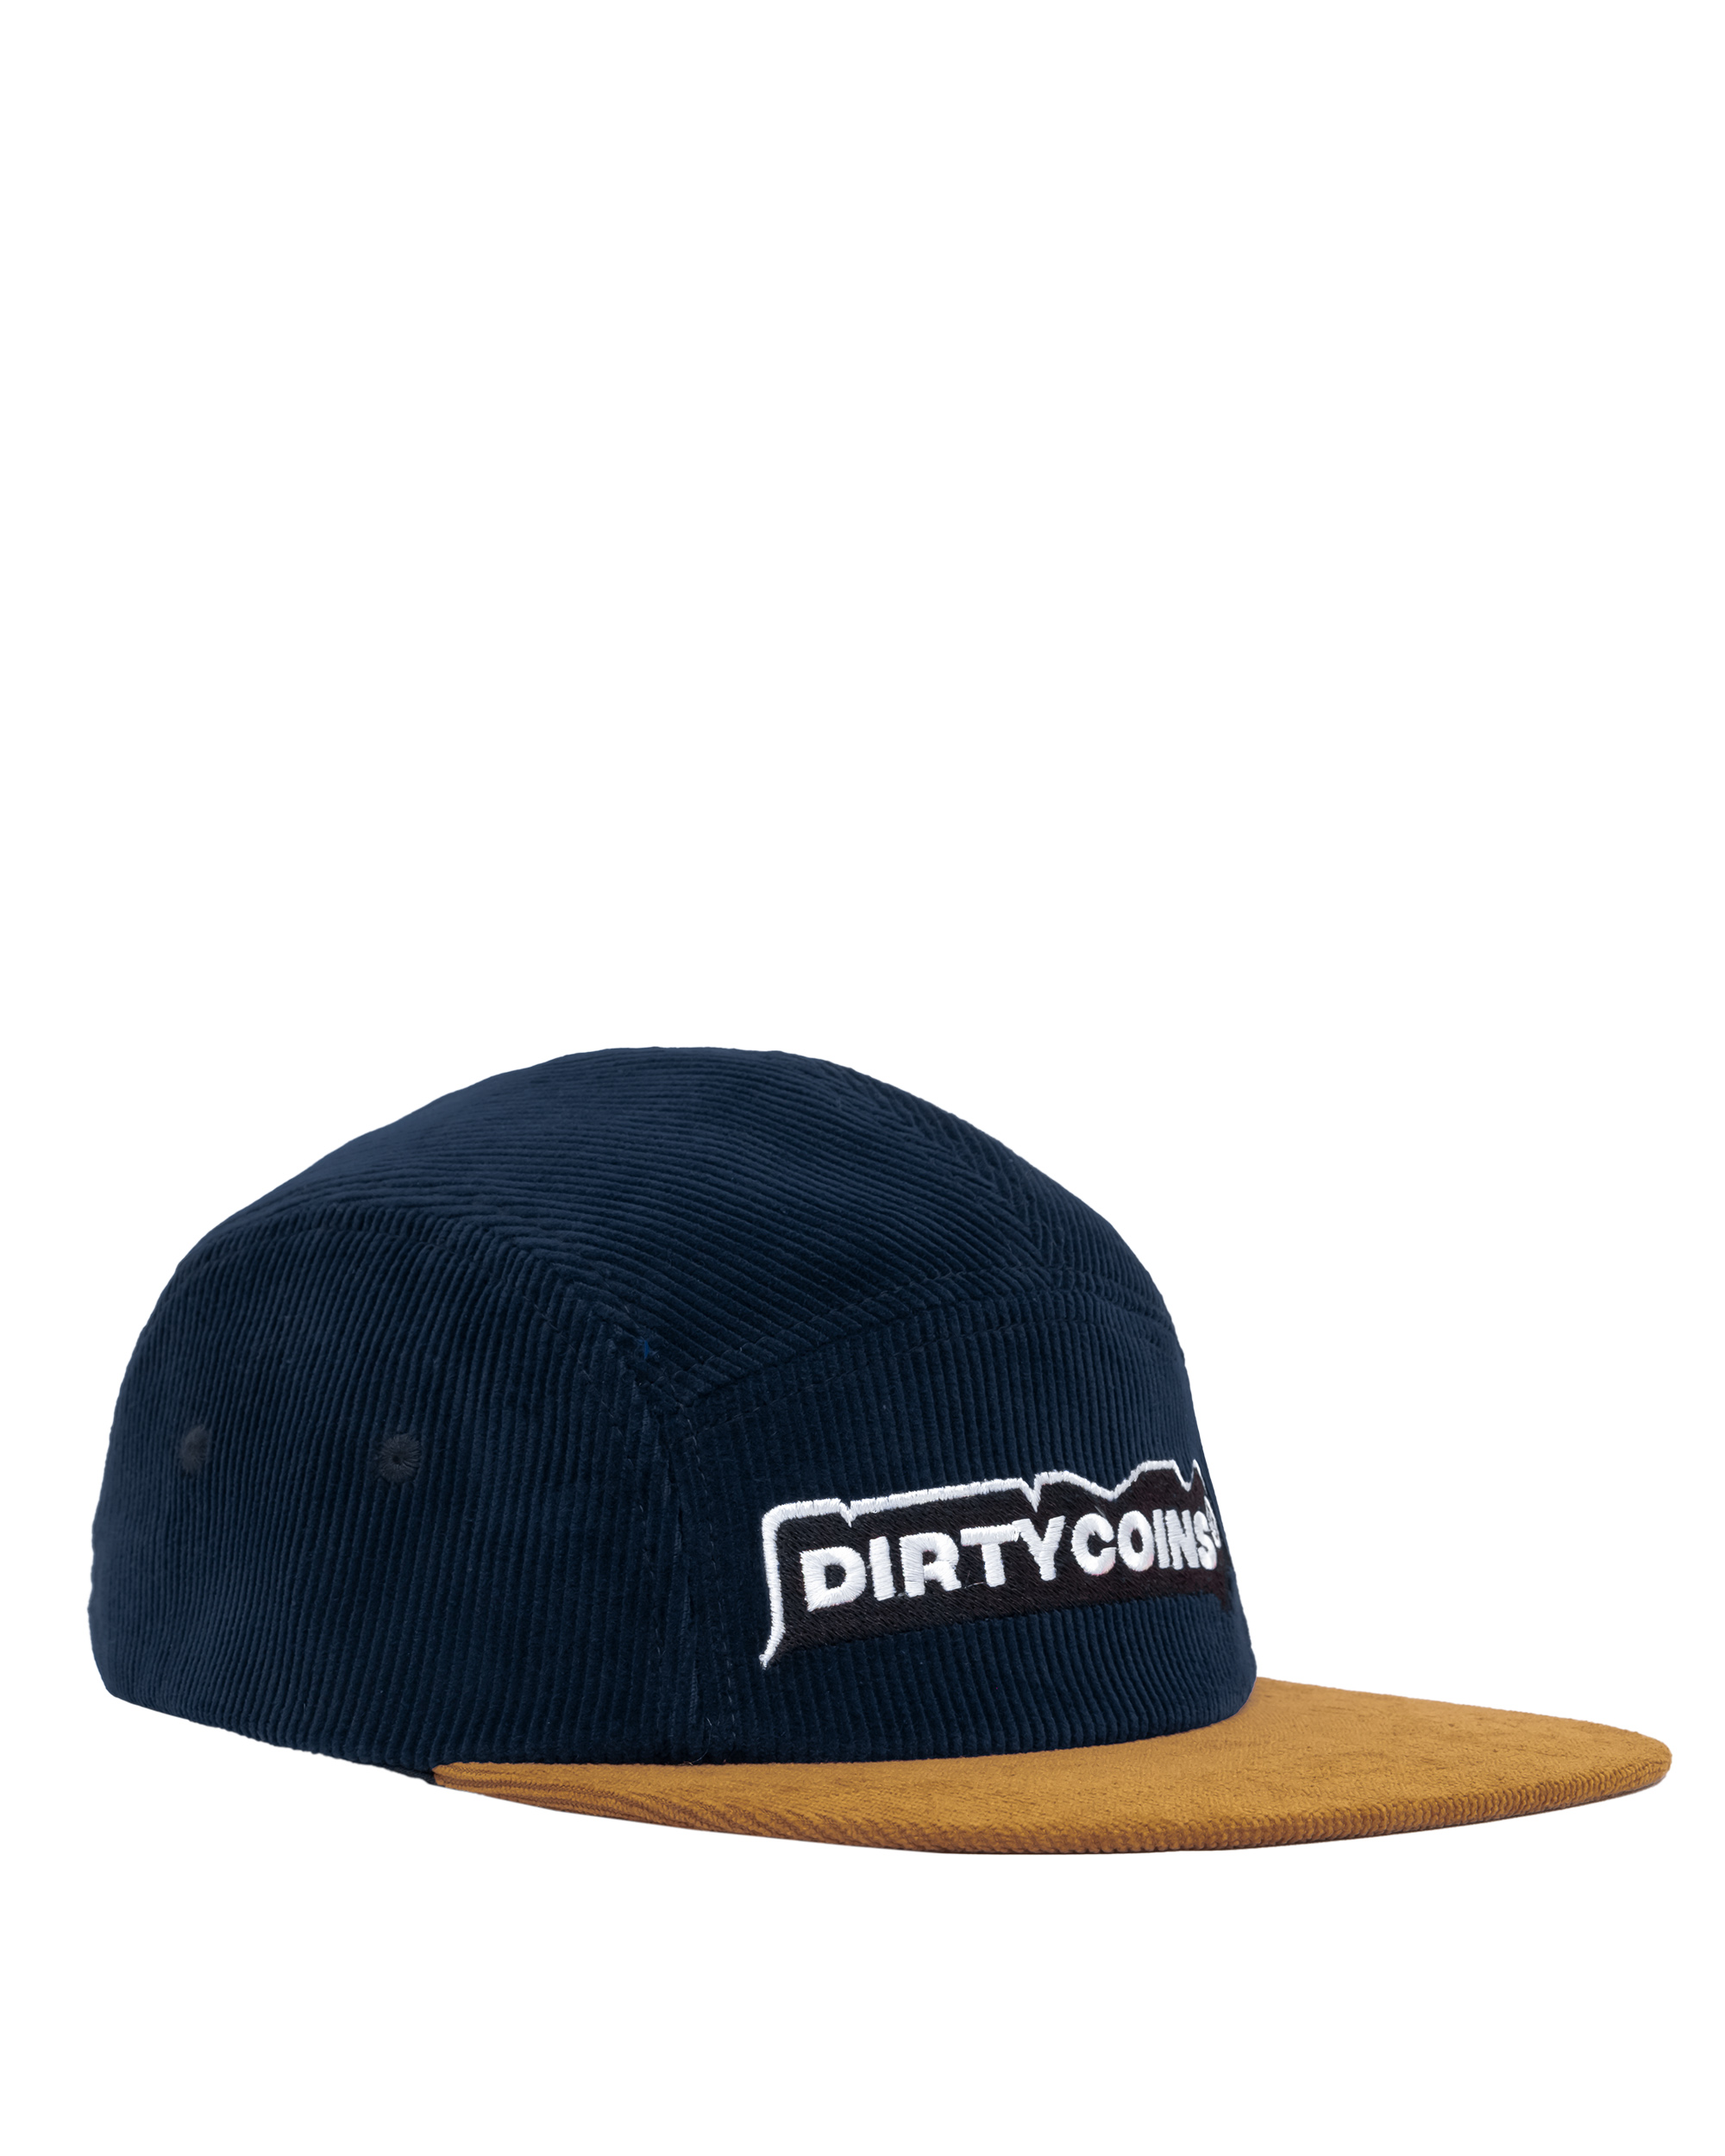 DirtyCoins Corduroy 5 Panels Cap - Blue